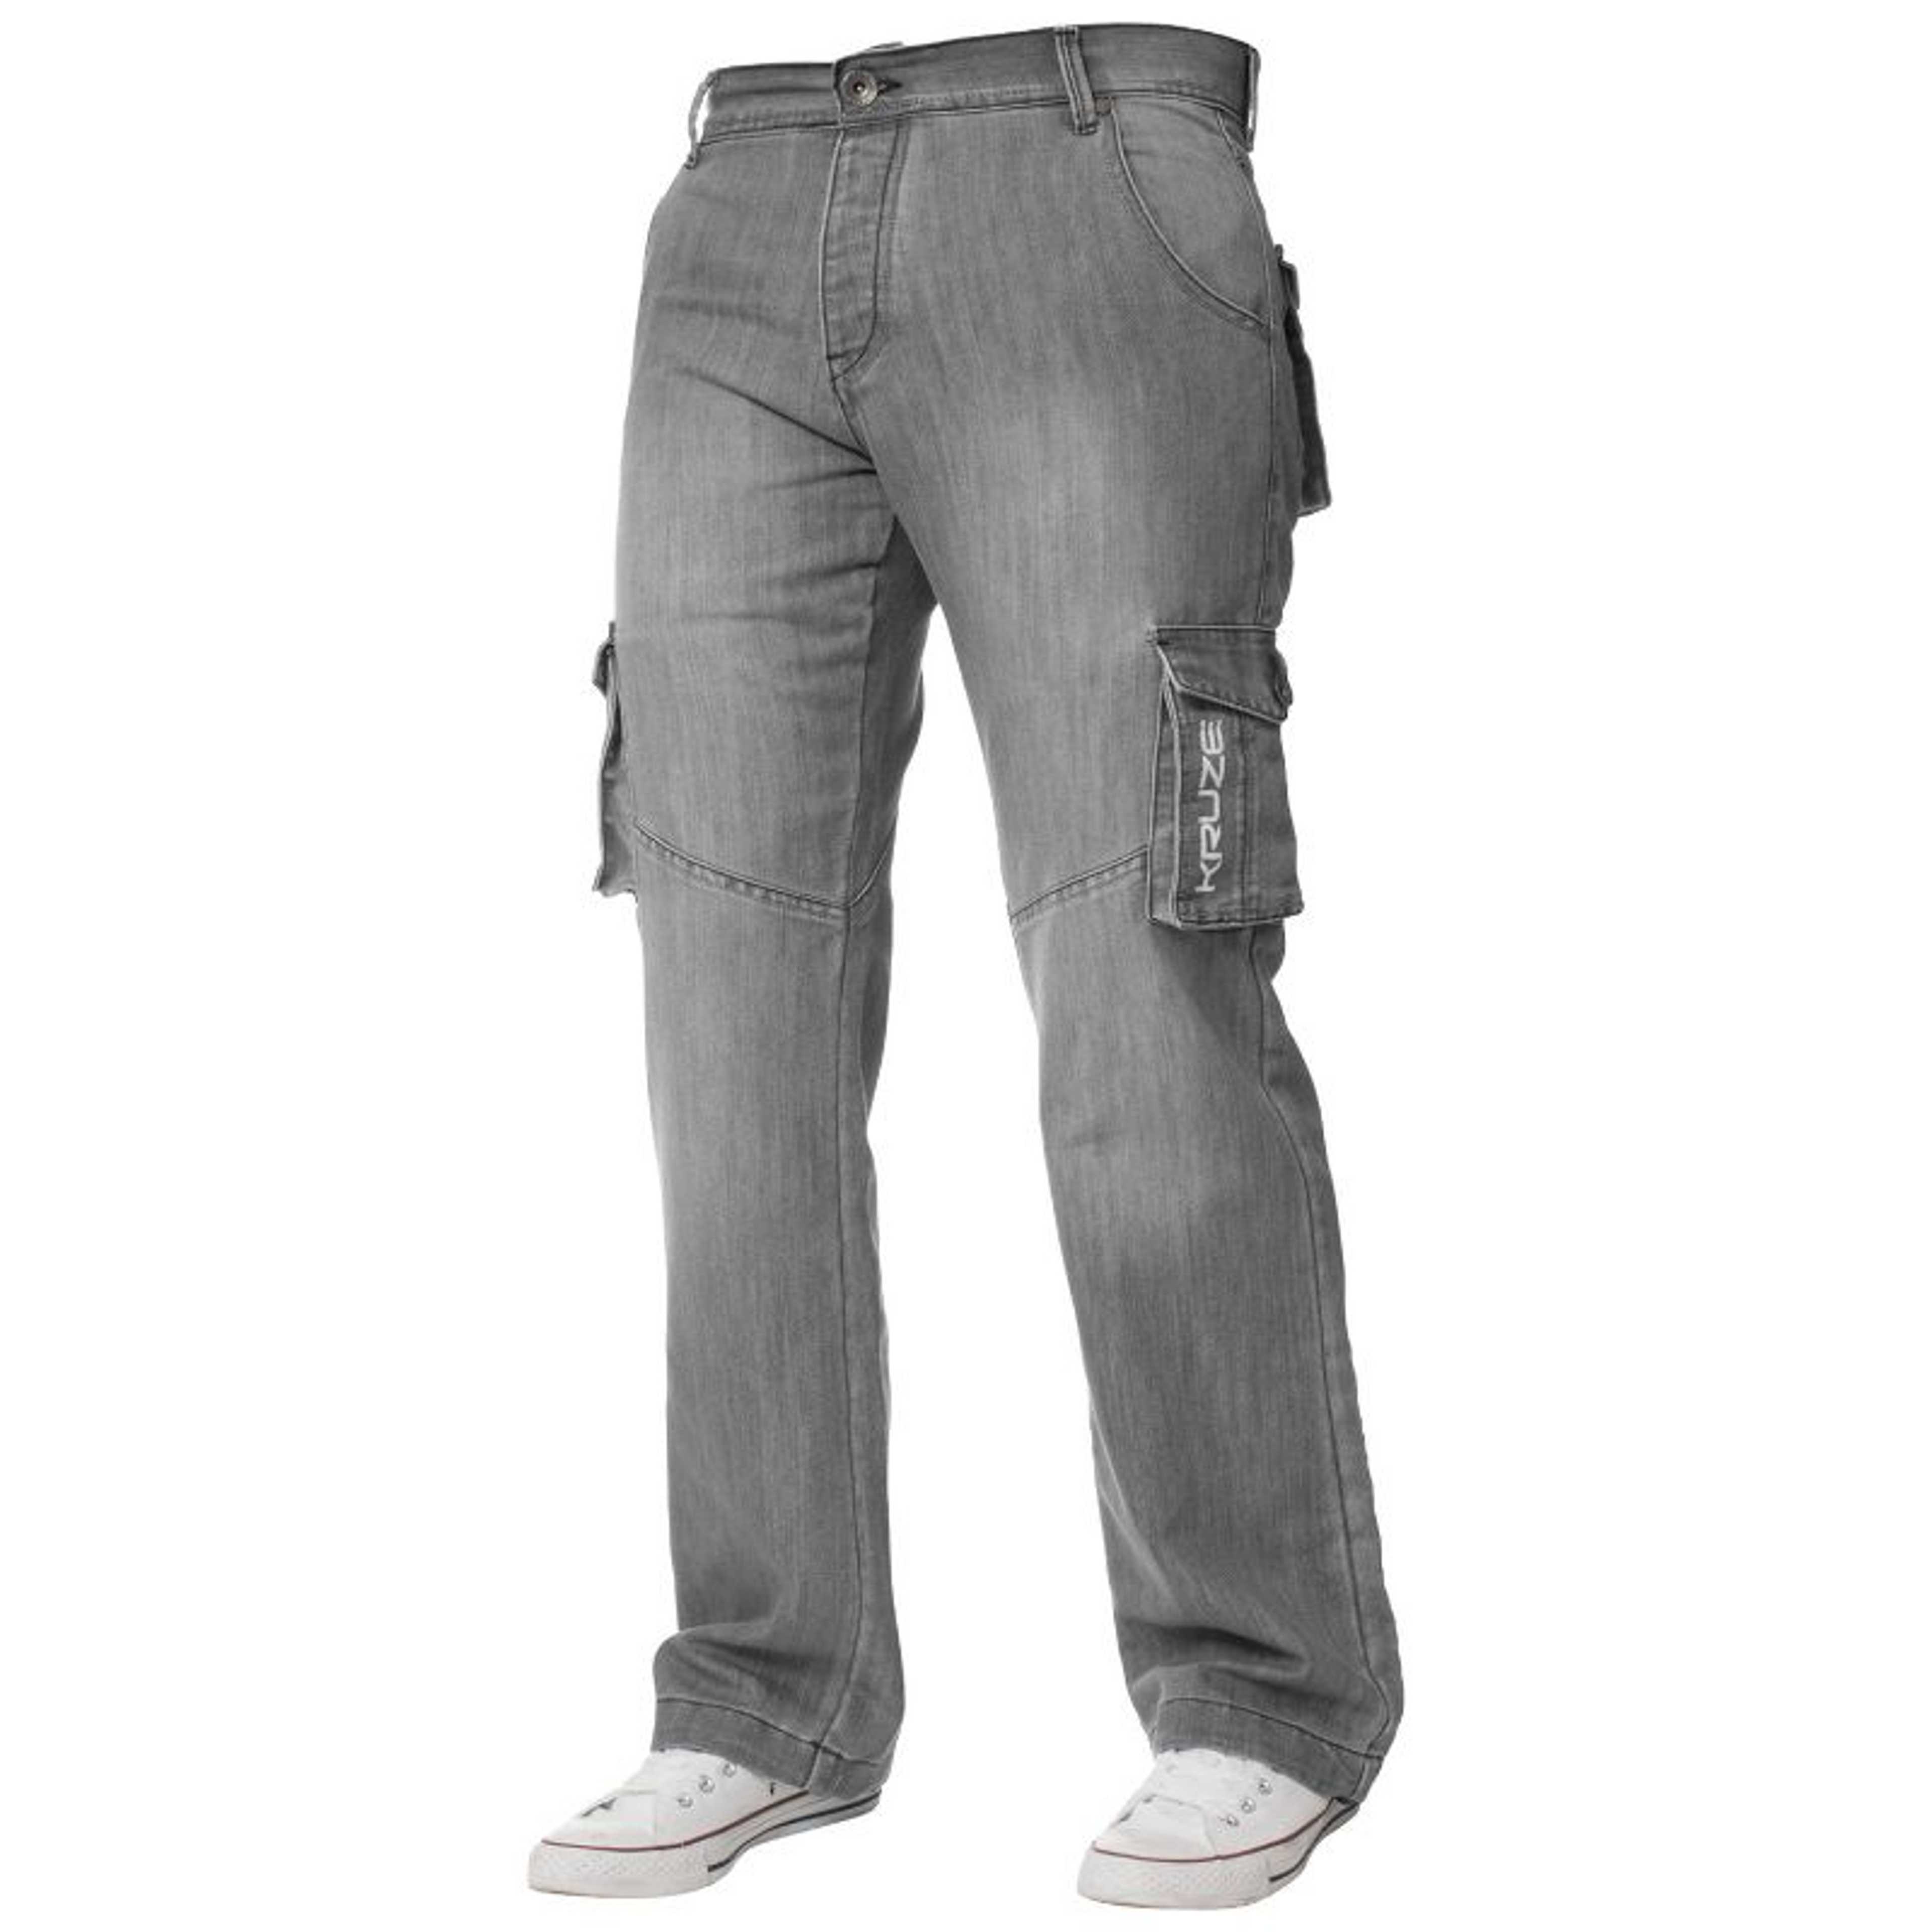 Rubahas Men’s Multi Pocket Denim Jeans Pant in Grey Color